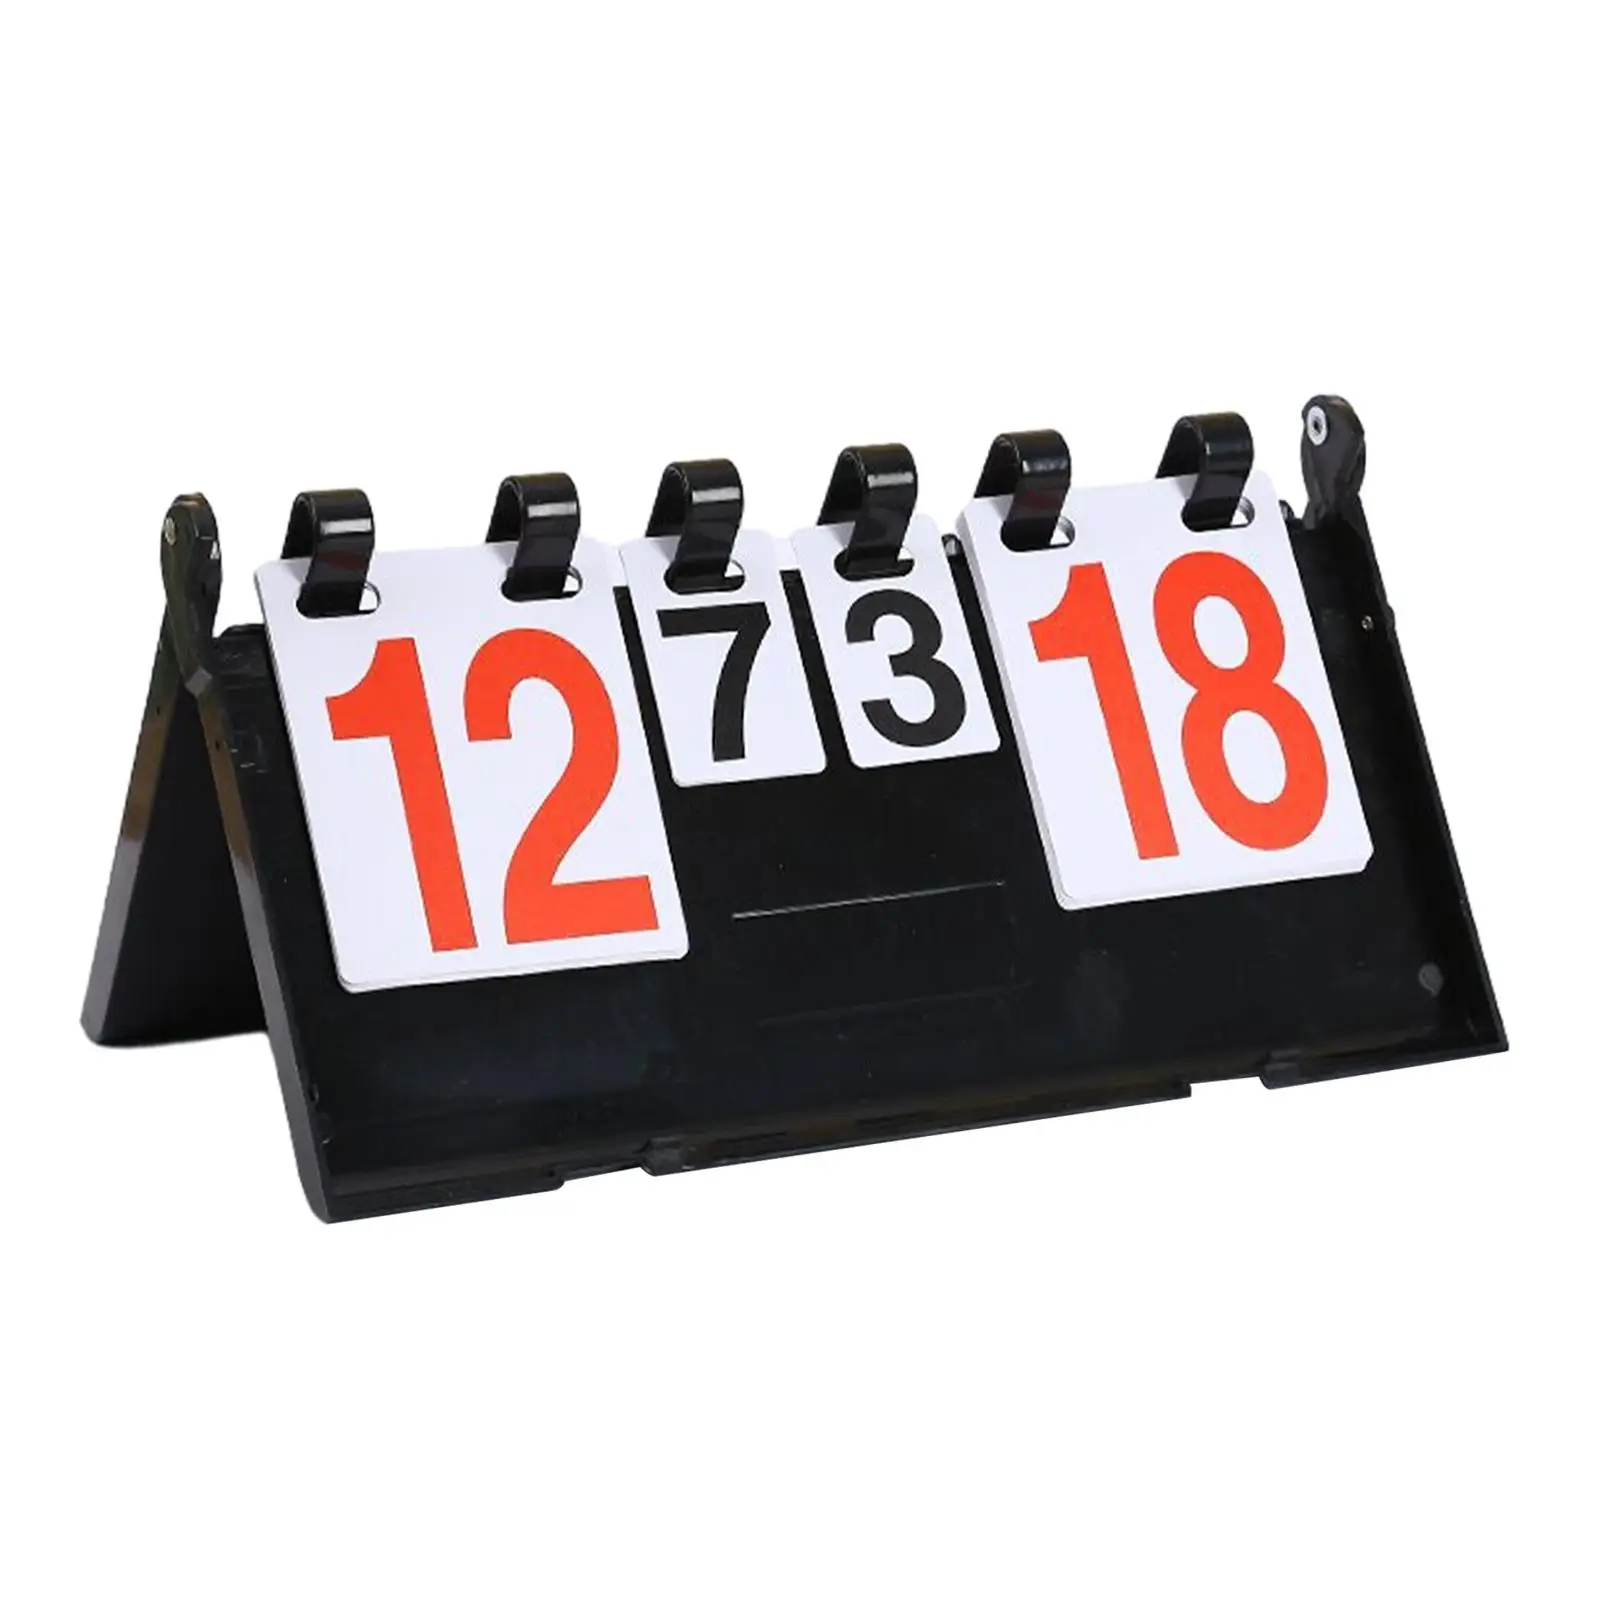 Score Board Scoreboard Compact Manual Foldable Professional Scoreboard Table